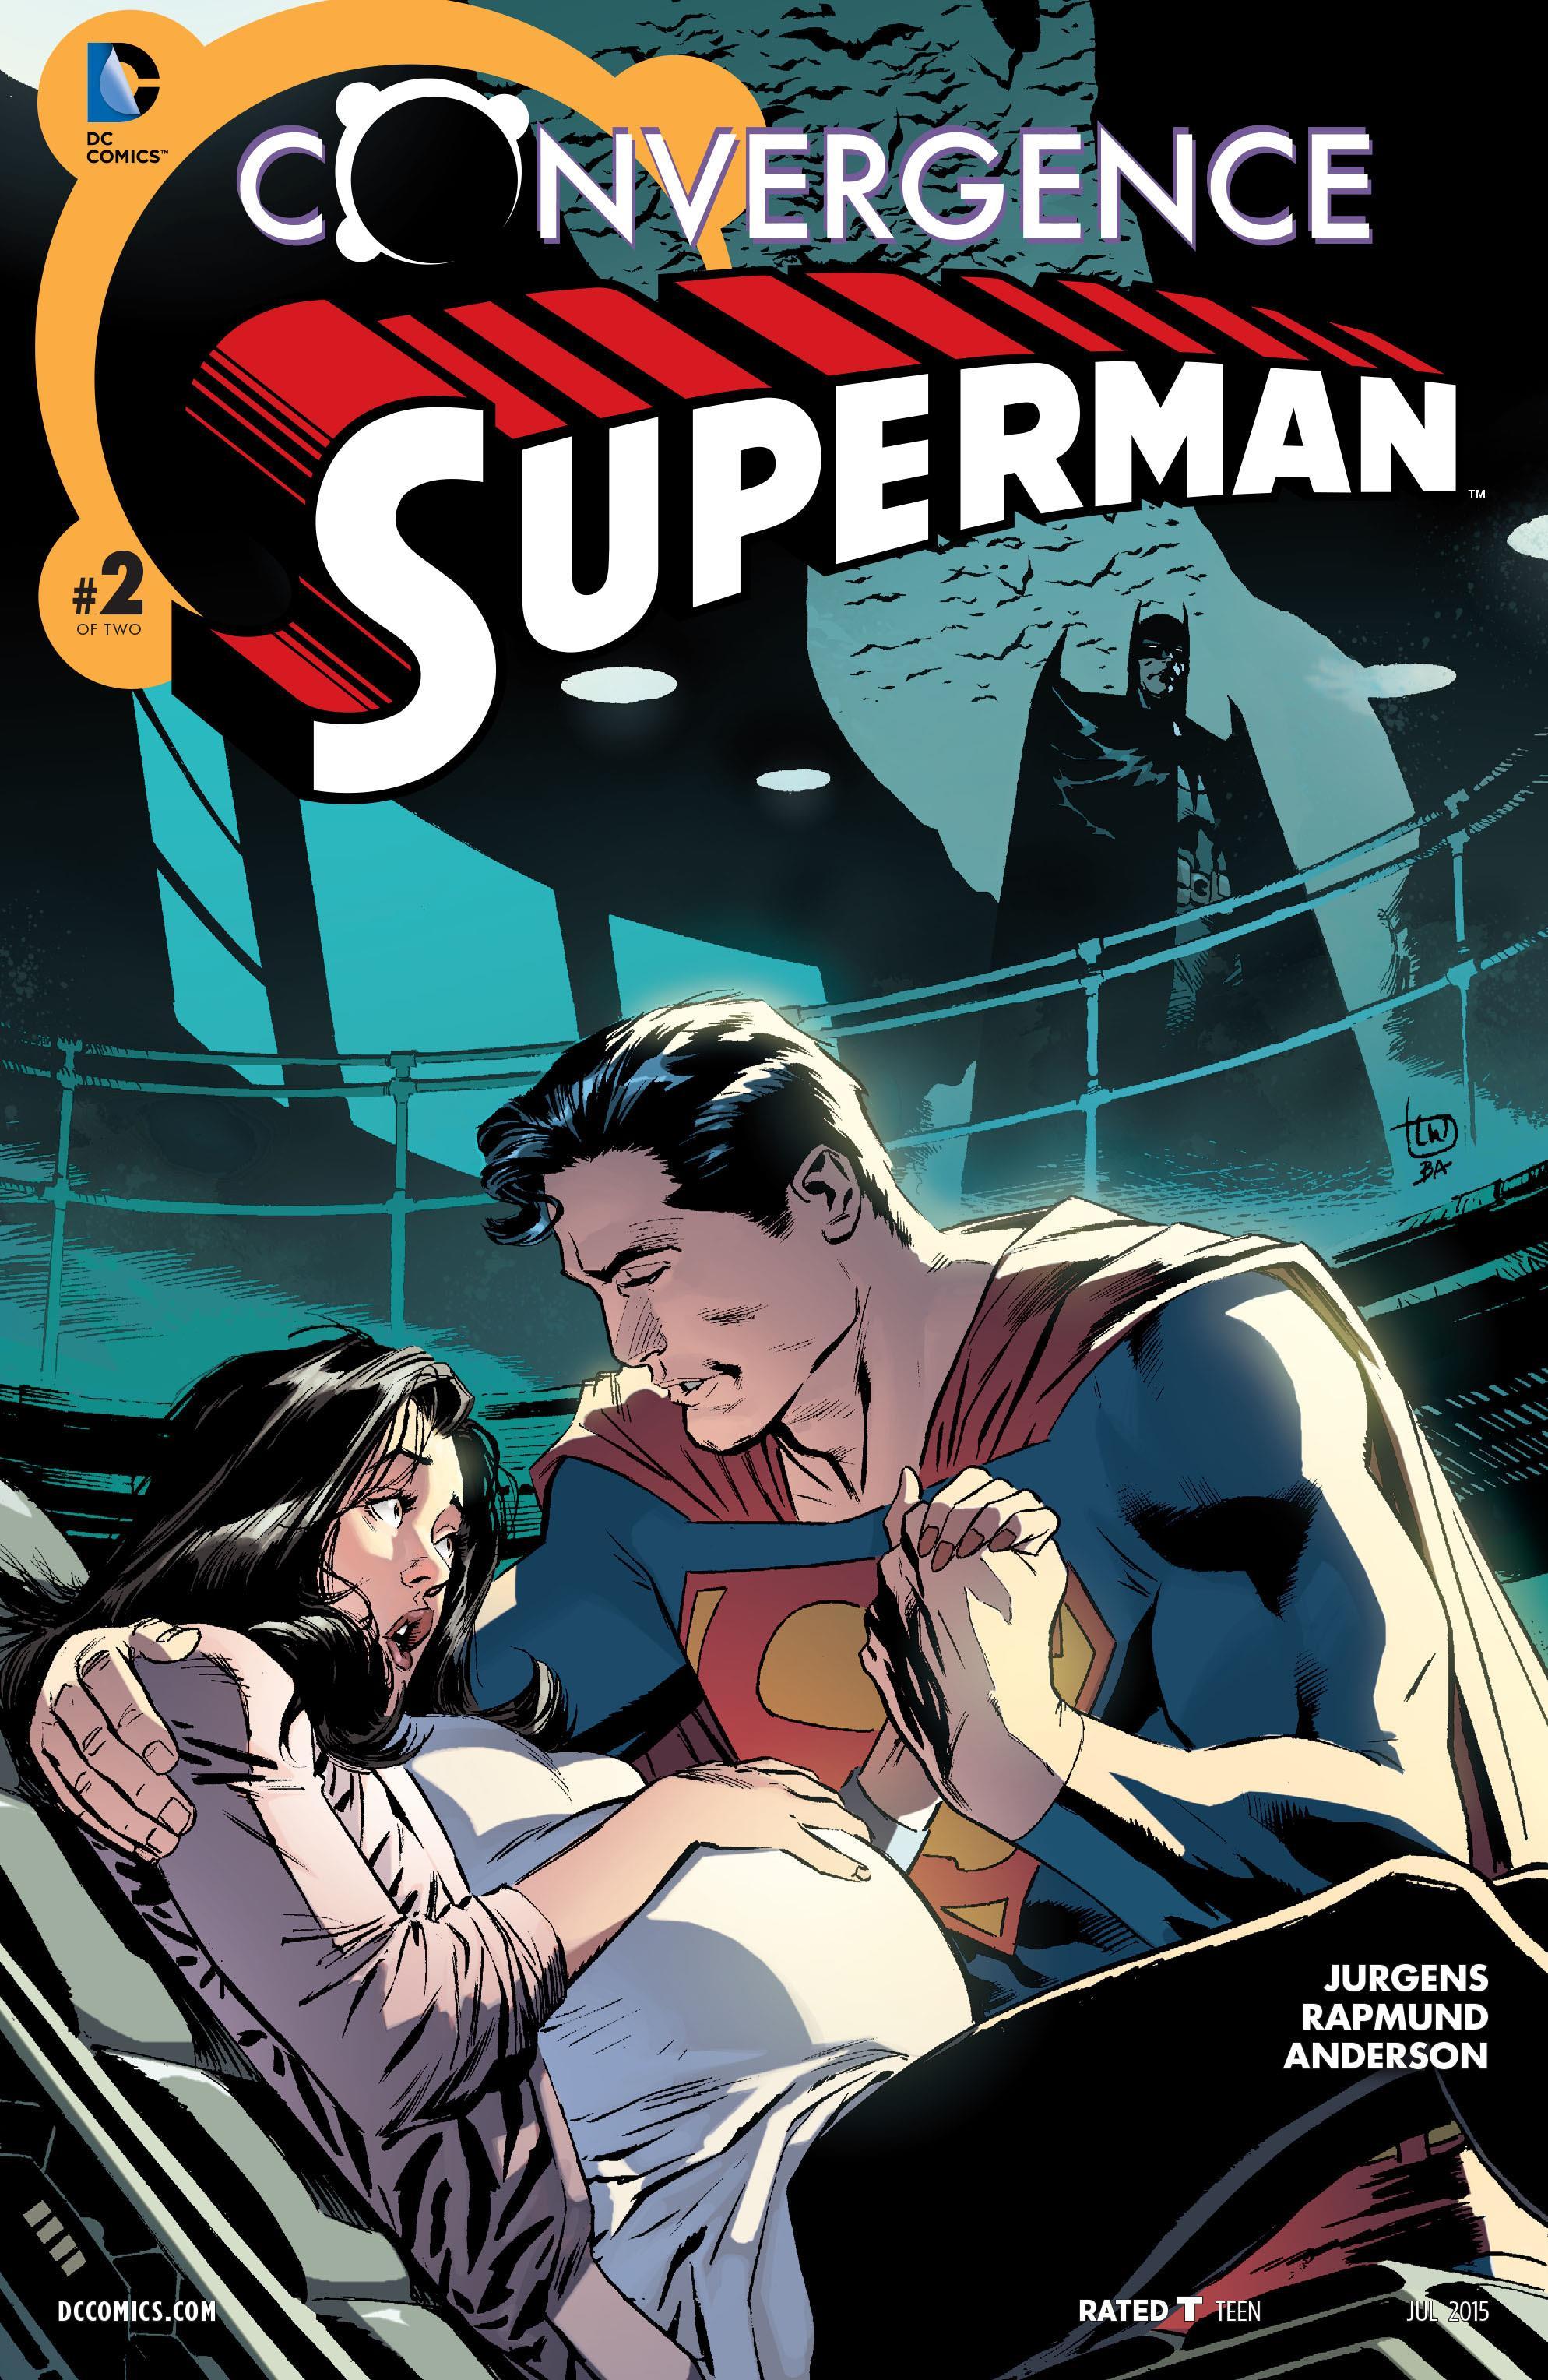 Convergence: Superman Vol. 1 #2